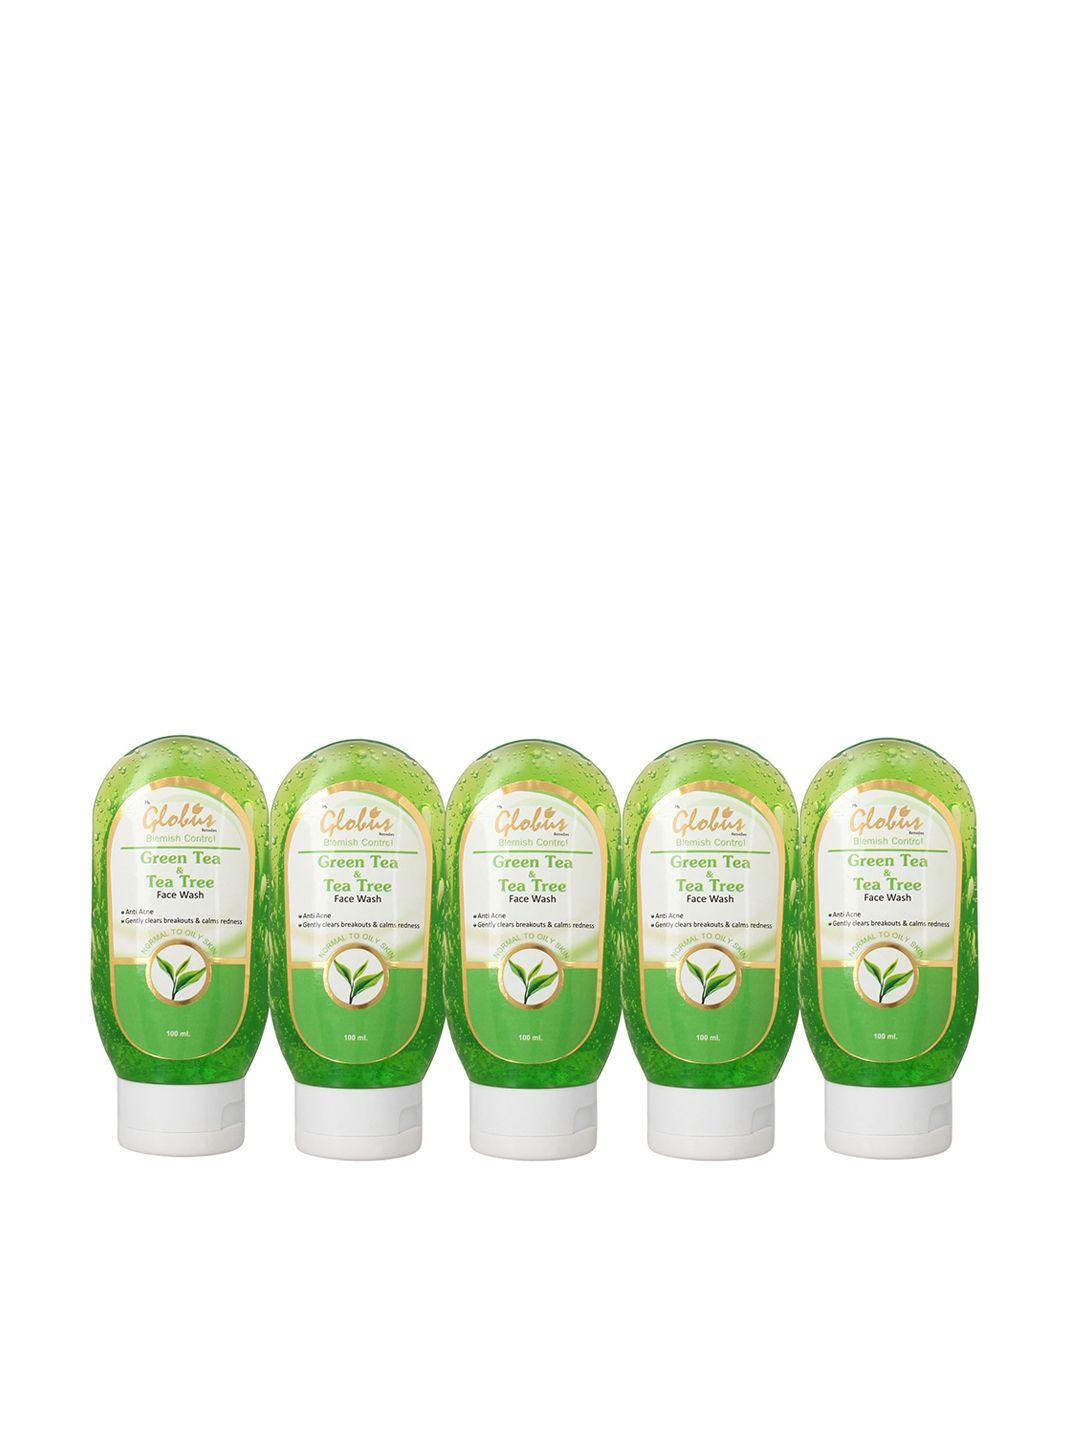 globus remedies set of 5 blemish control green tea & tea tree face wash - 100 ml each